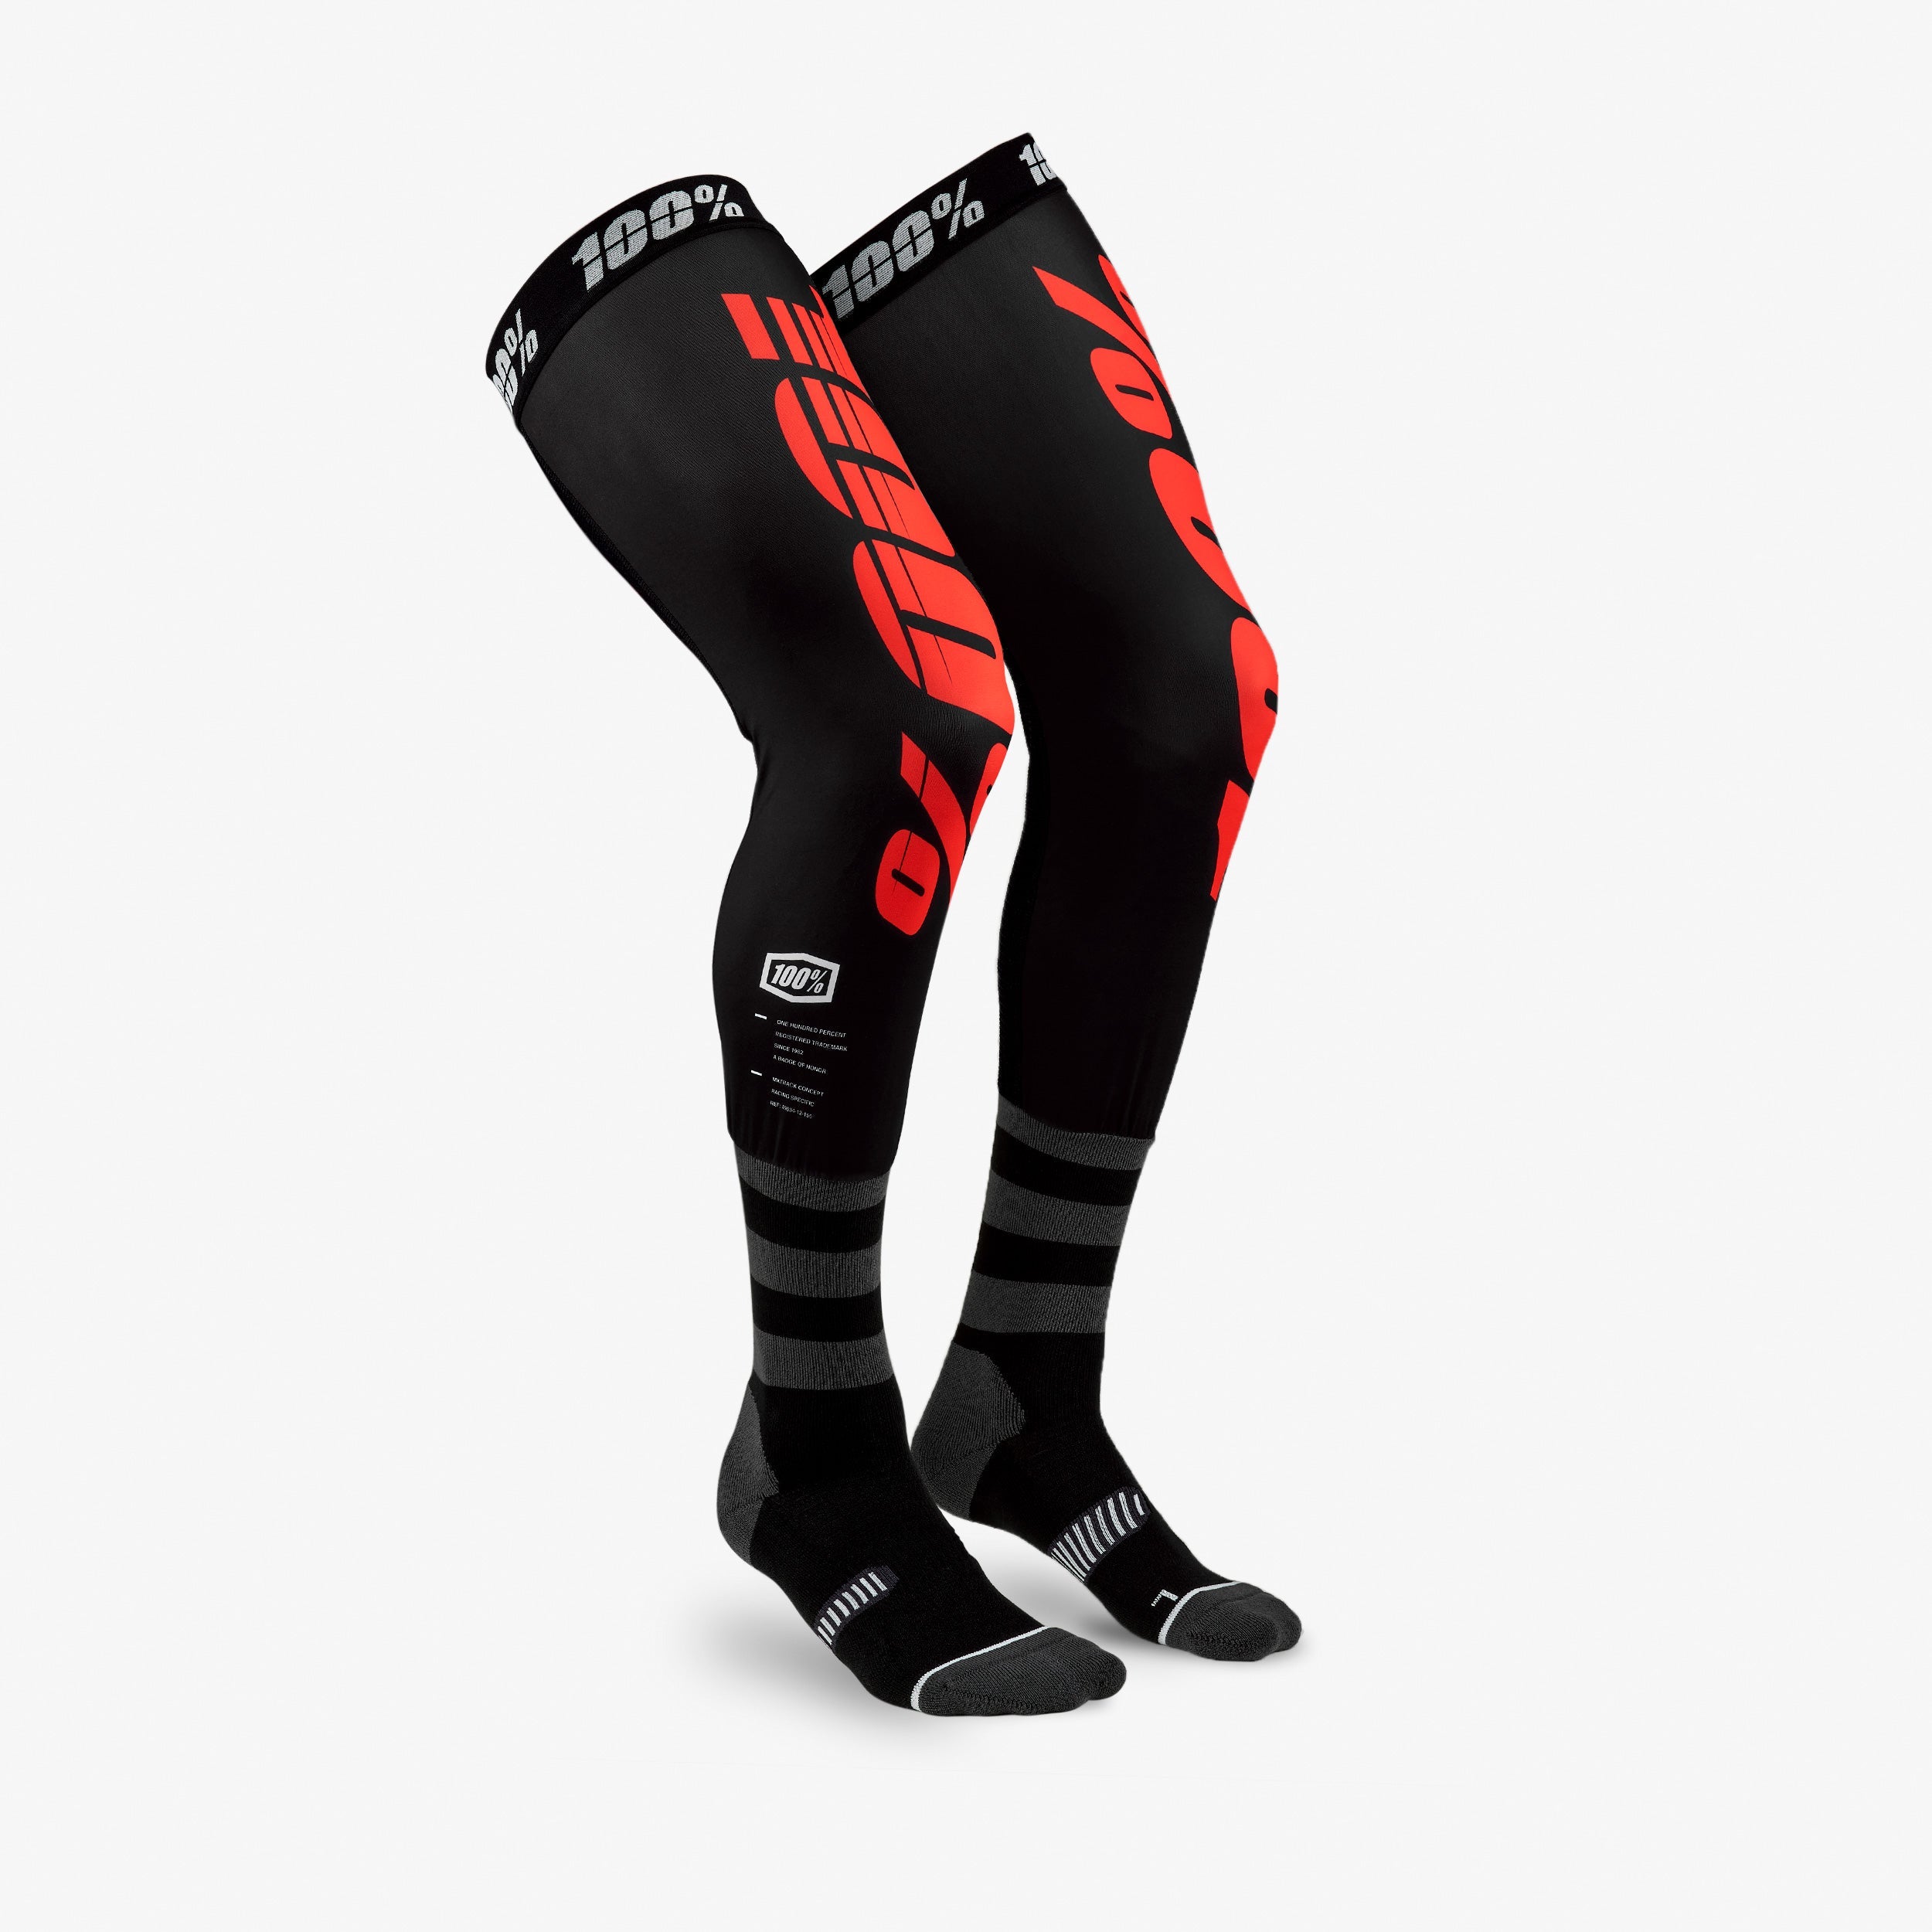 REV Knee Brace Performance Moto Socks Black/Red